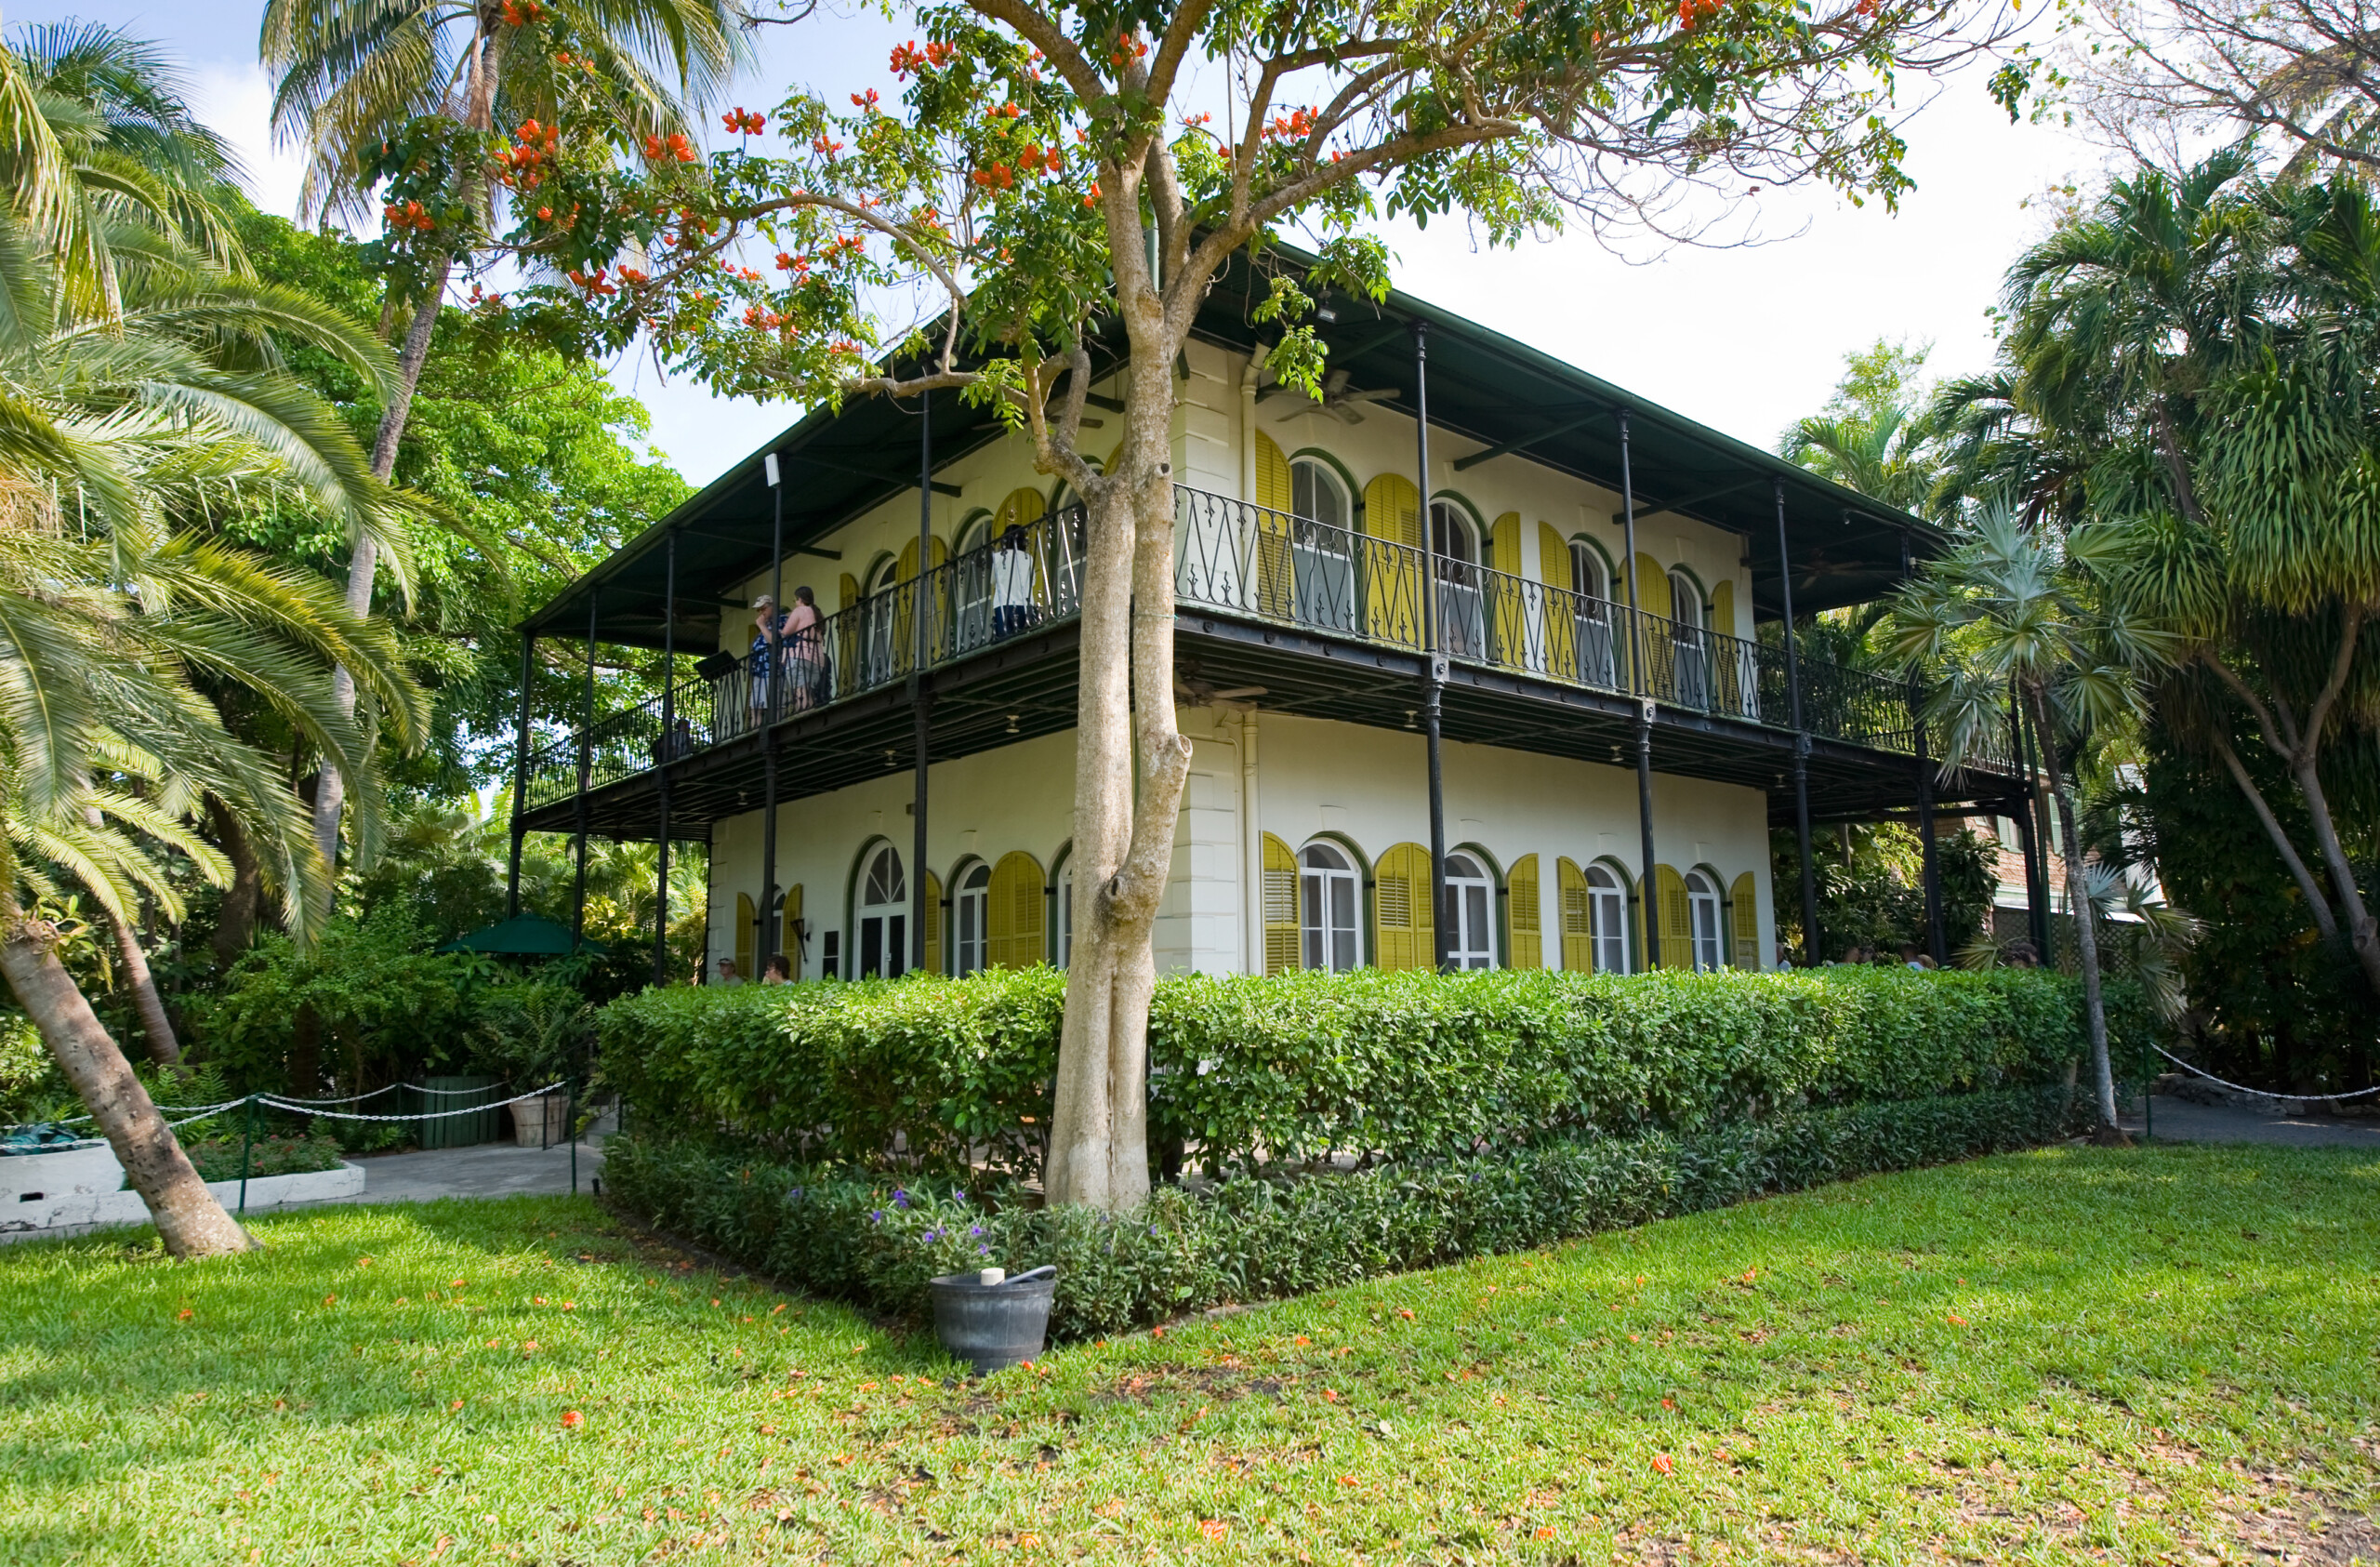 KEY WEST, FLORYDA Dom Ernesta Hemingwaya z ogrodem w Key West na Florydzie., licencja: shutterstock/By Robert Hoetlink